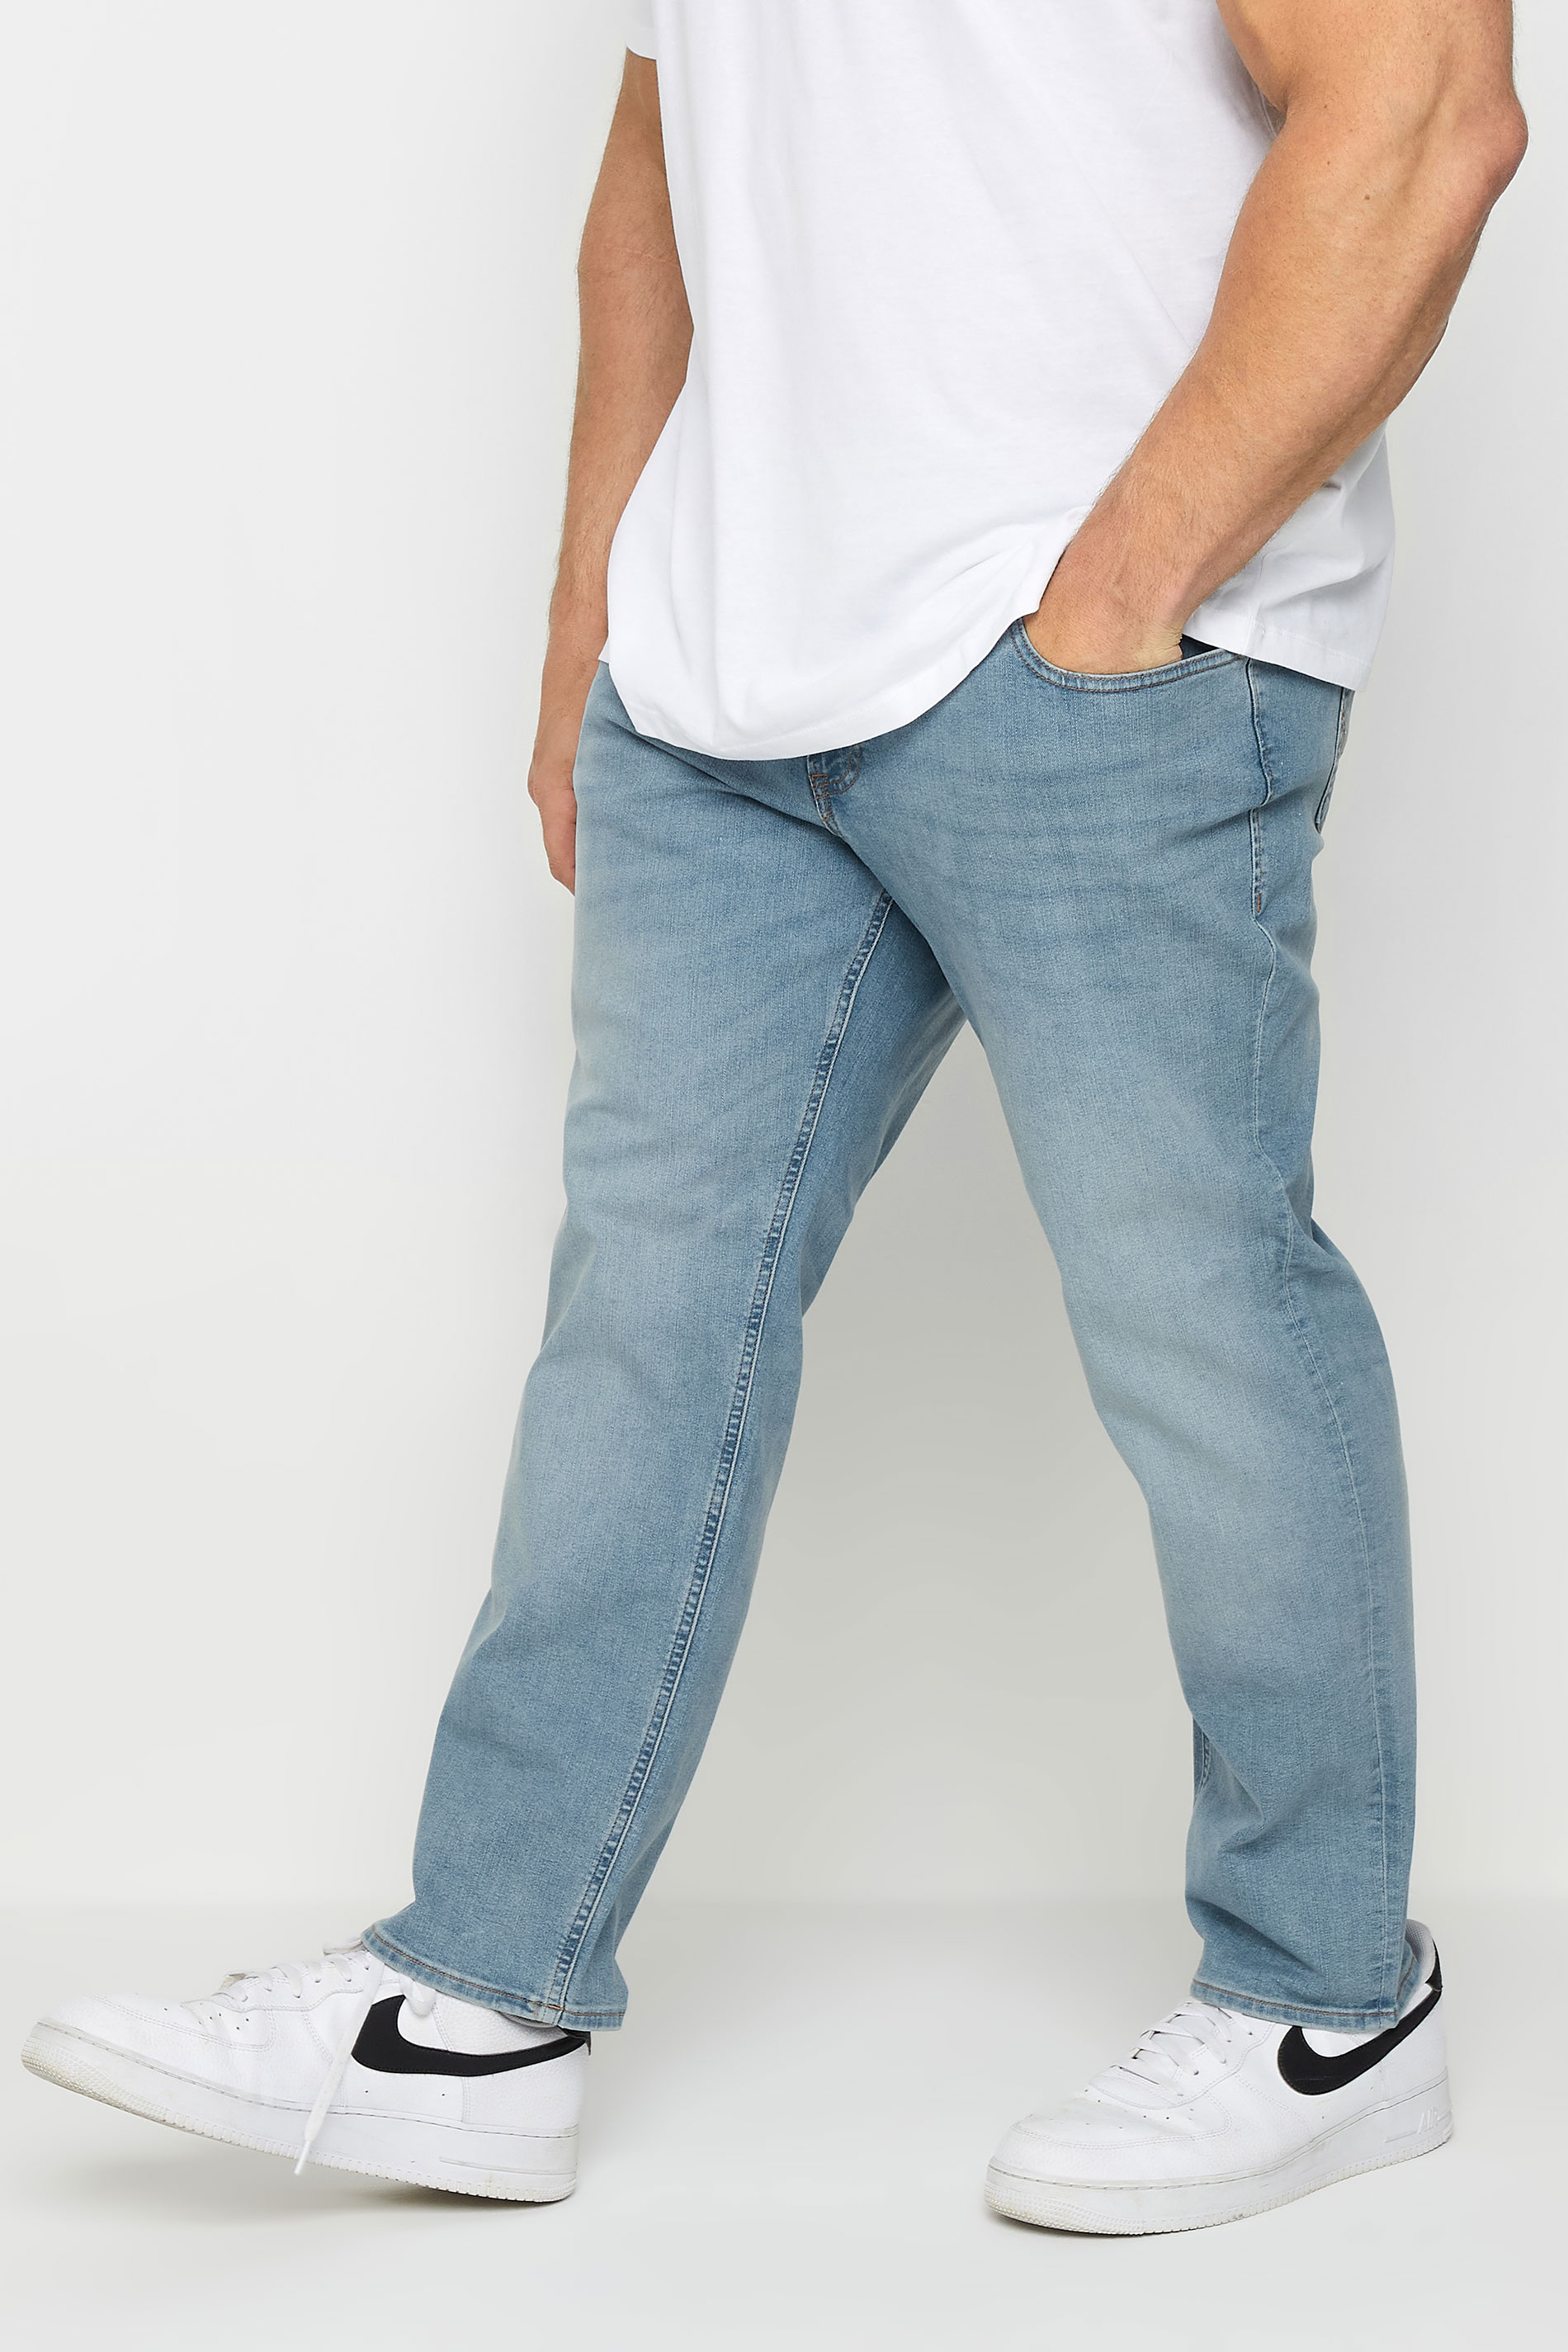 Image of Inside Leg Size 30", Waist Size 48 Mens Jack & Jones Big & Tall Blue Light Wash Mike Jeans Big & Tall